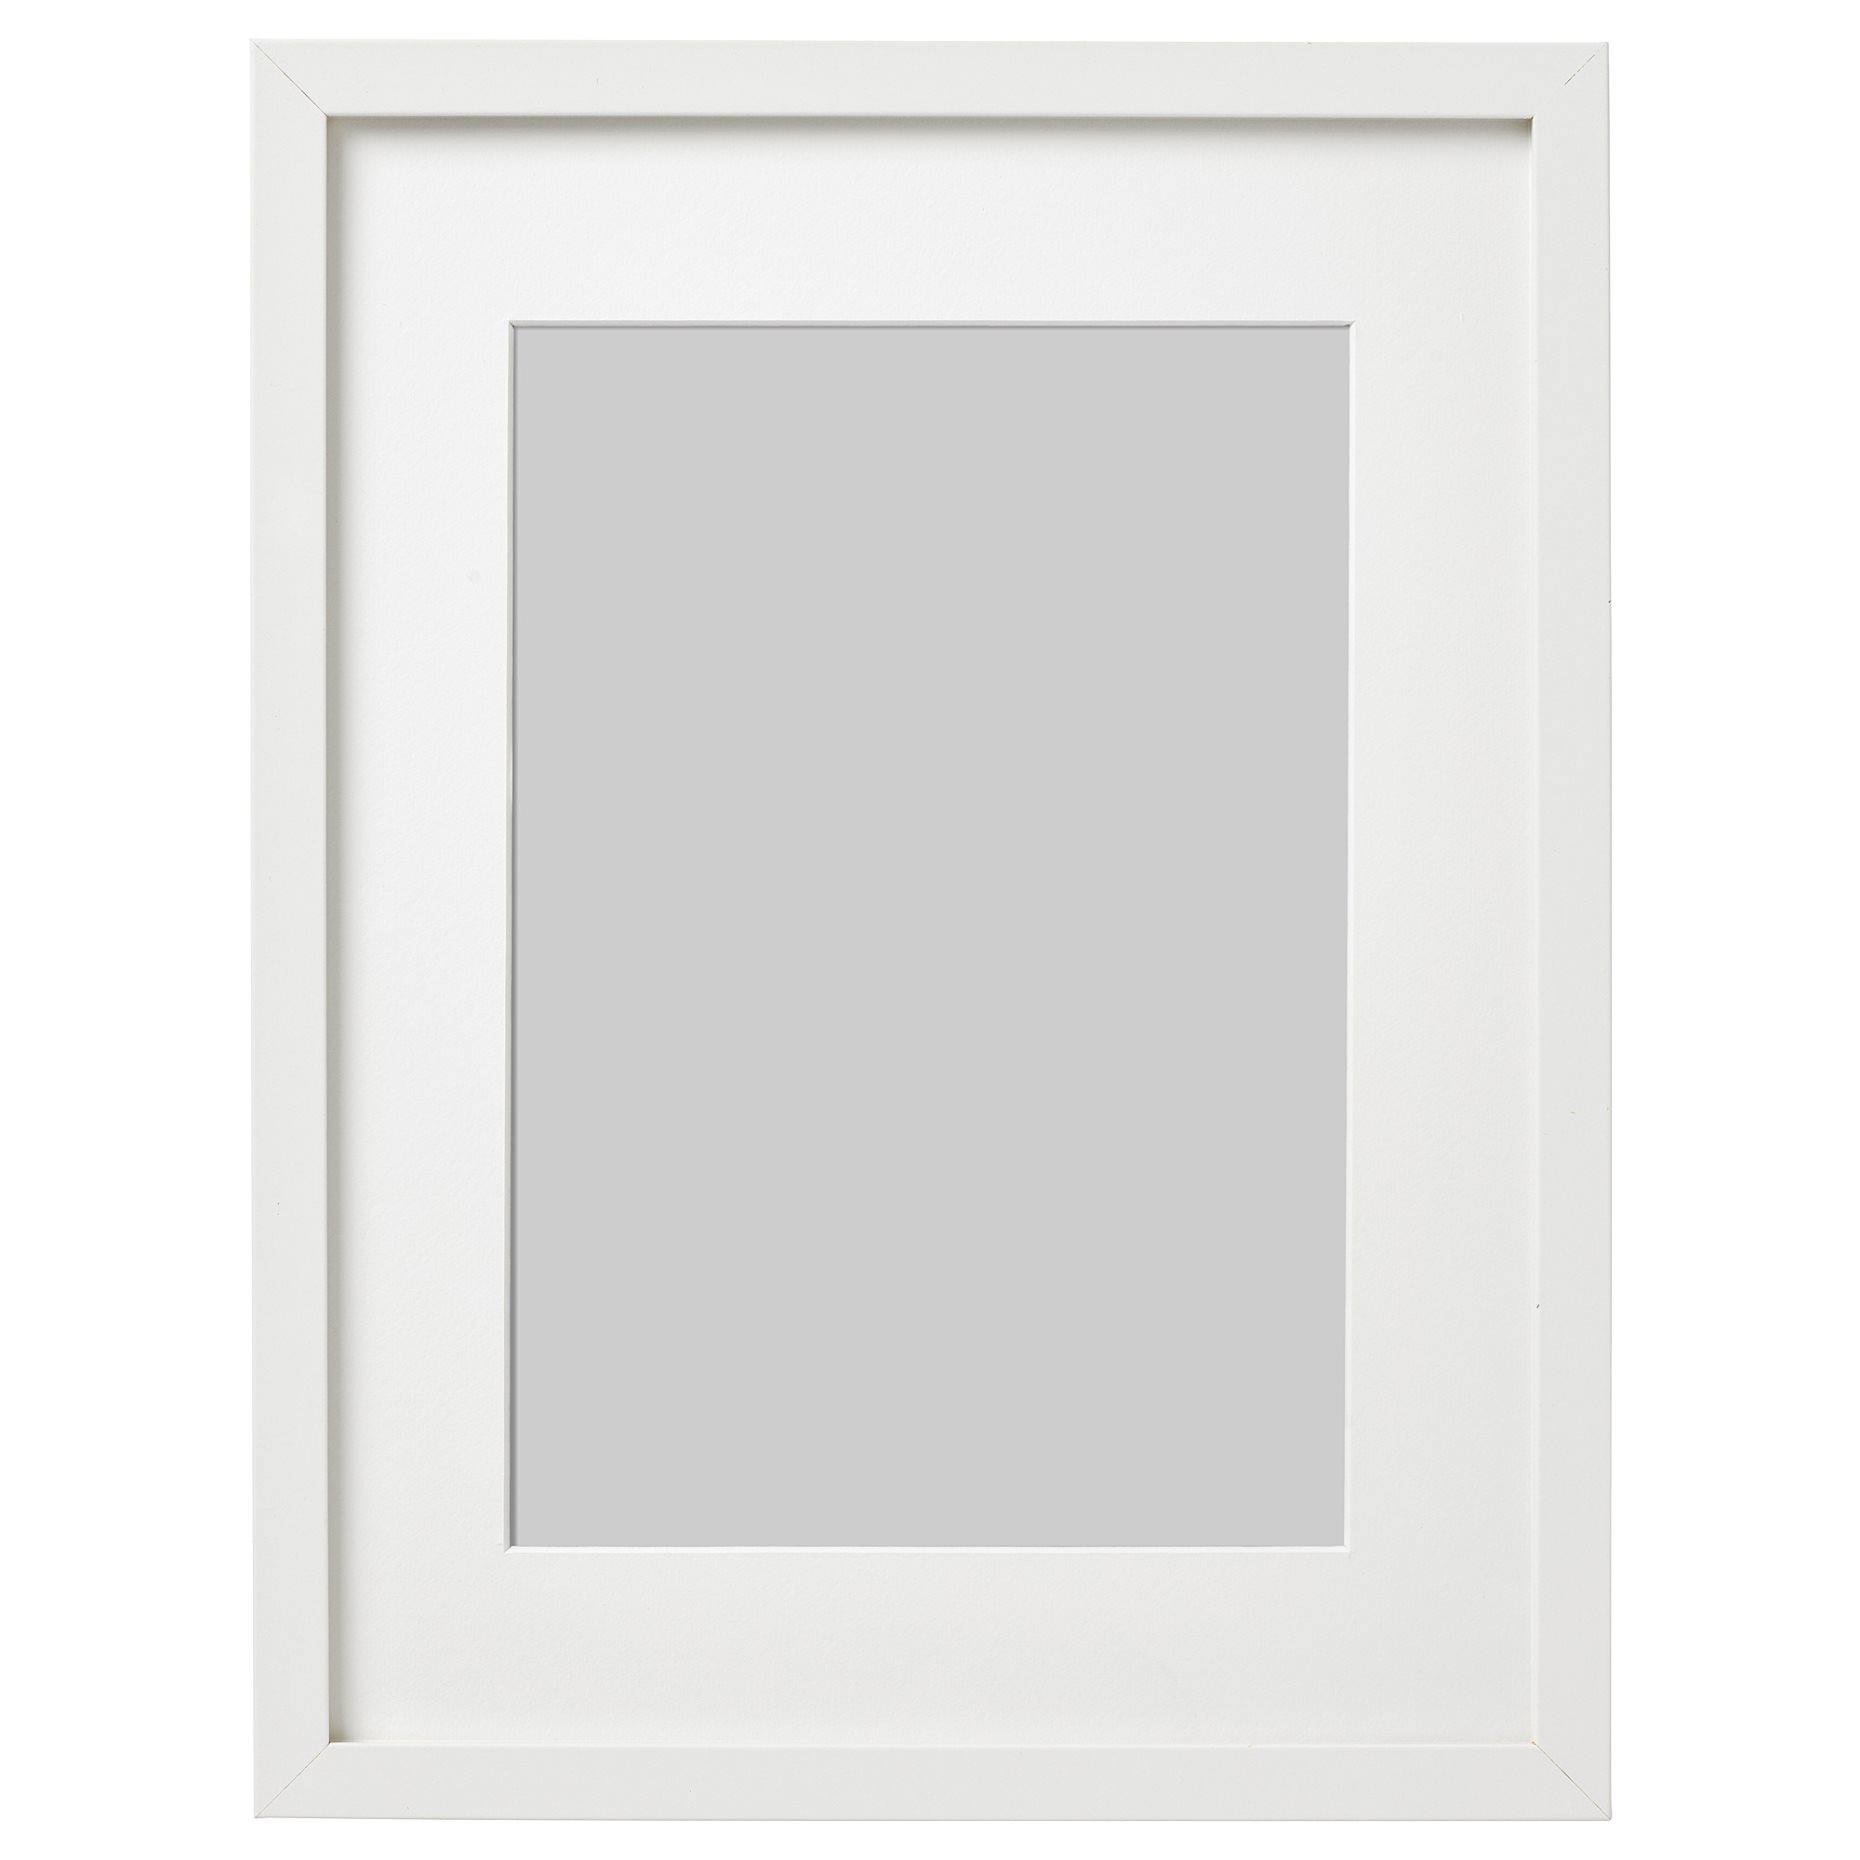 RIBBA, frame, 30x40 cm, 803.784.23